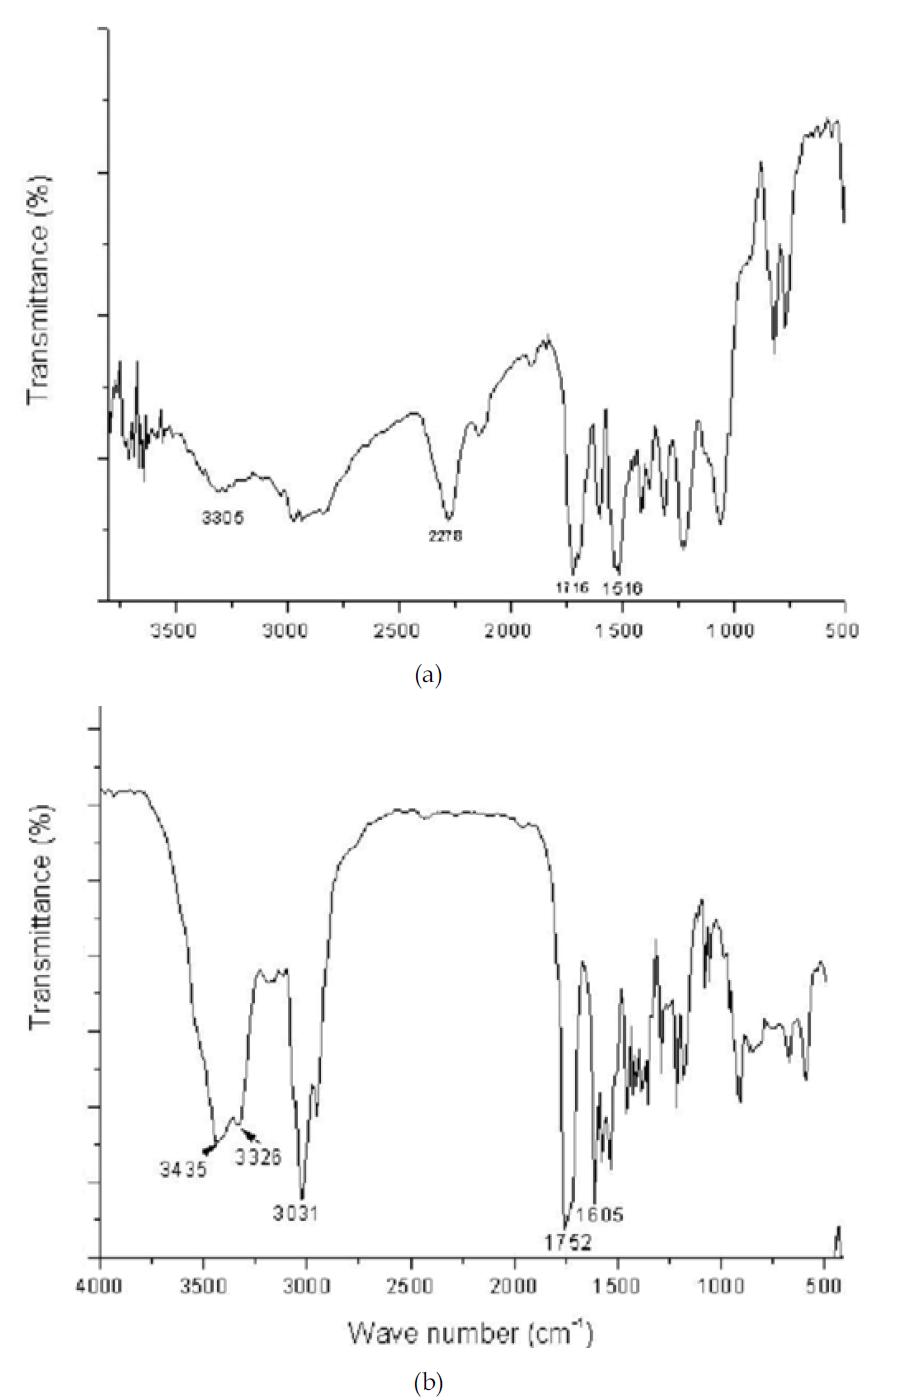 IR spectra of rigid PU foam (a) and its aminolysis product with caprolactam (b).